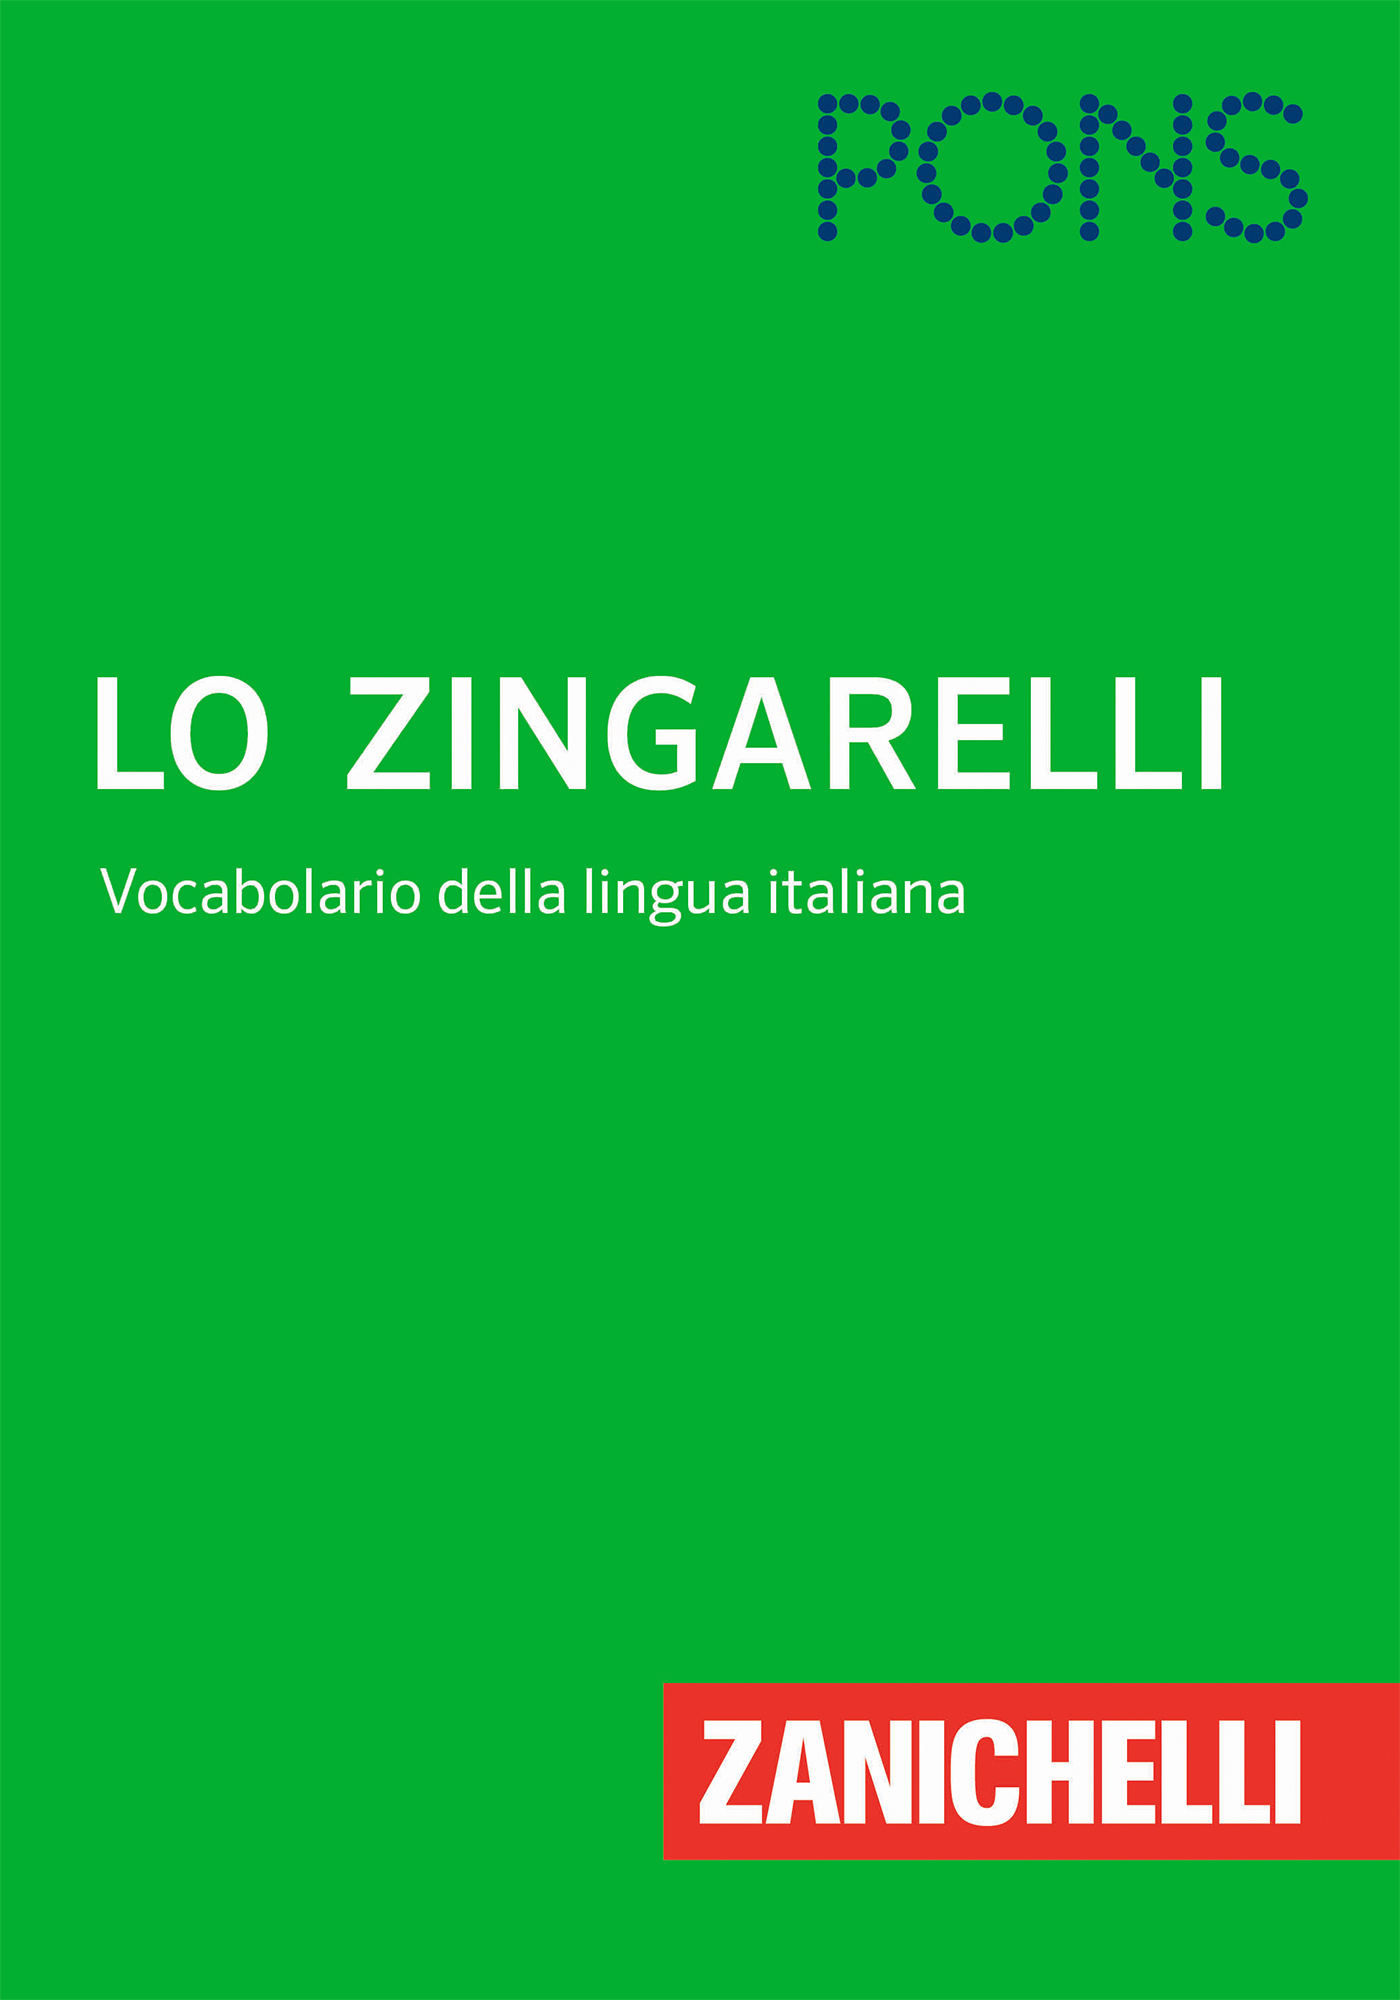 PONS Lo Zingarelli